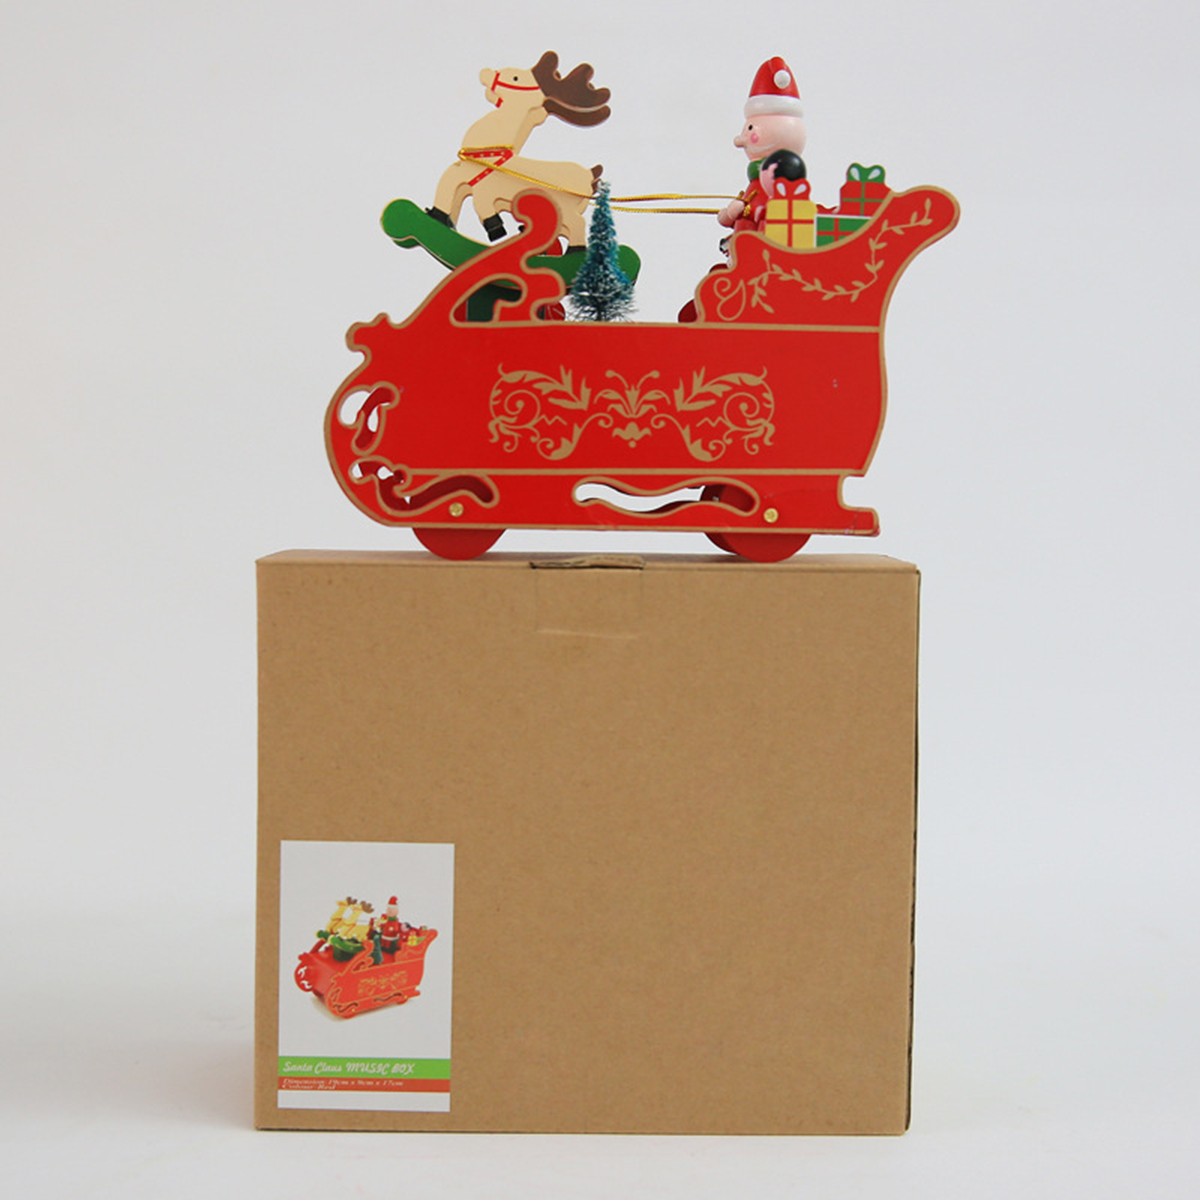 Christmas-Music-Box-Birthday-Gift-Music-Toy-Reindeer-Train-Design-1351727